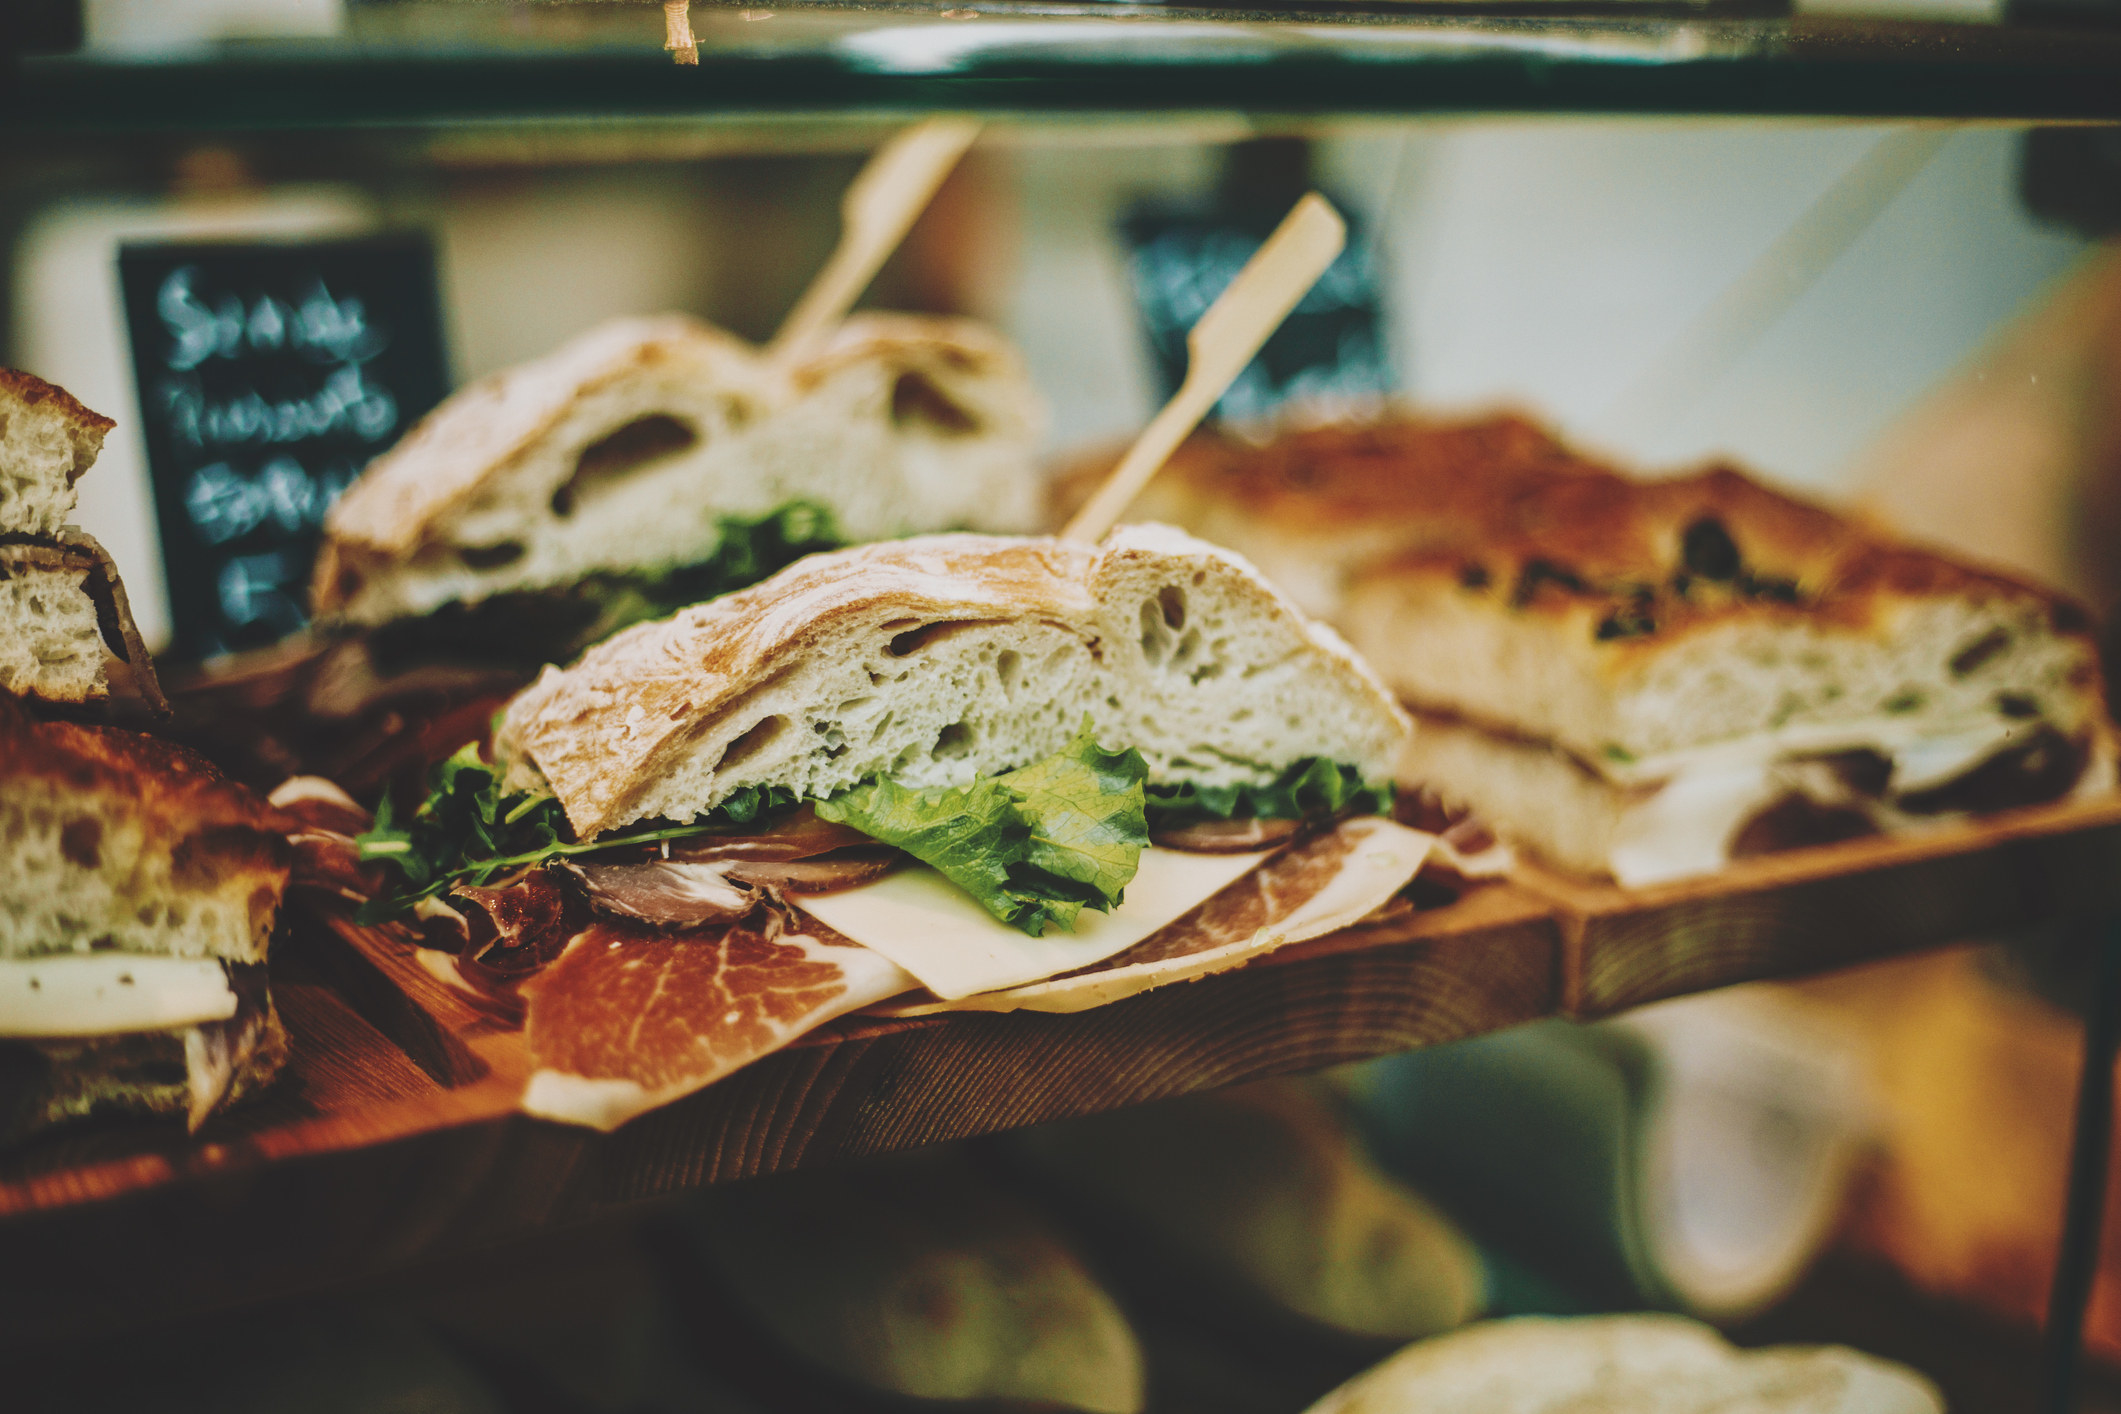 Vegan sandwich displayed in window shop